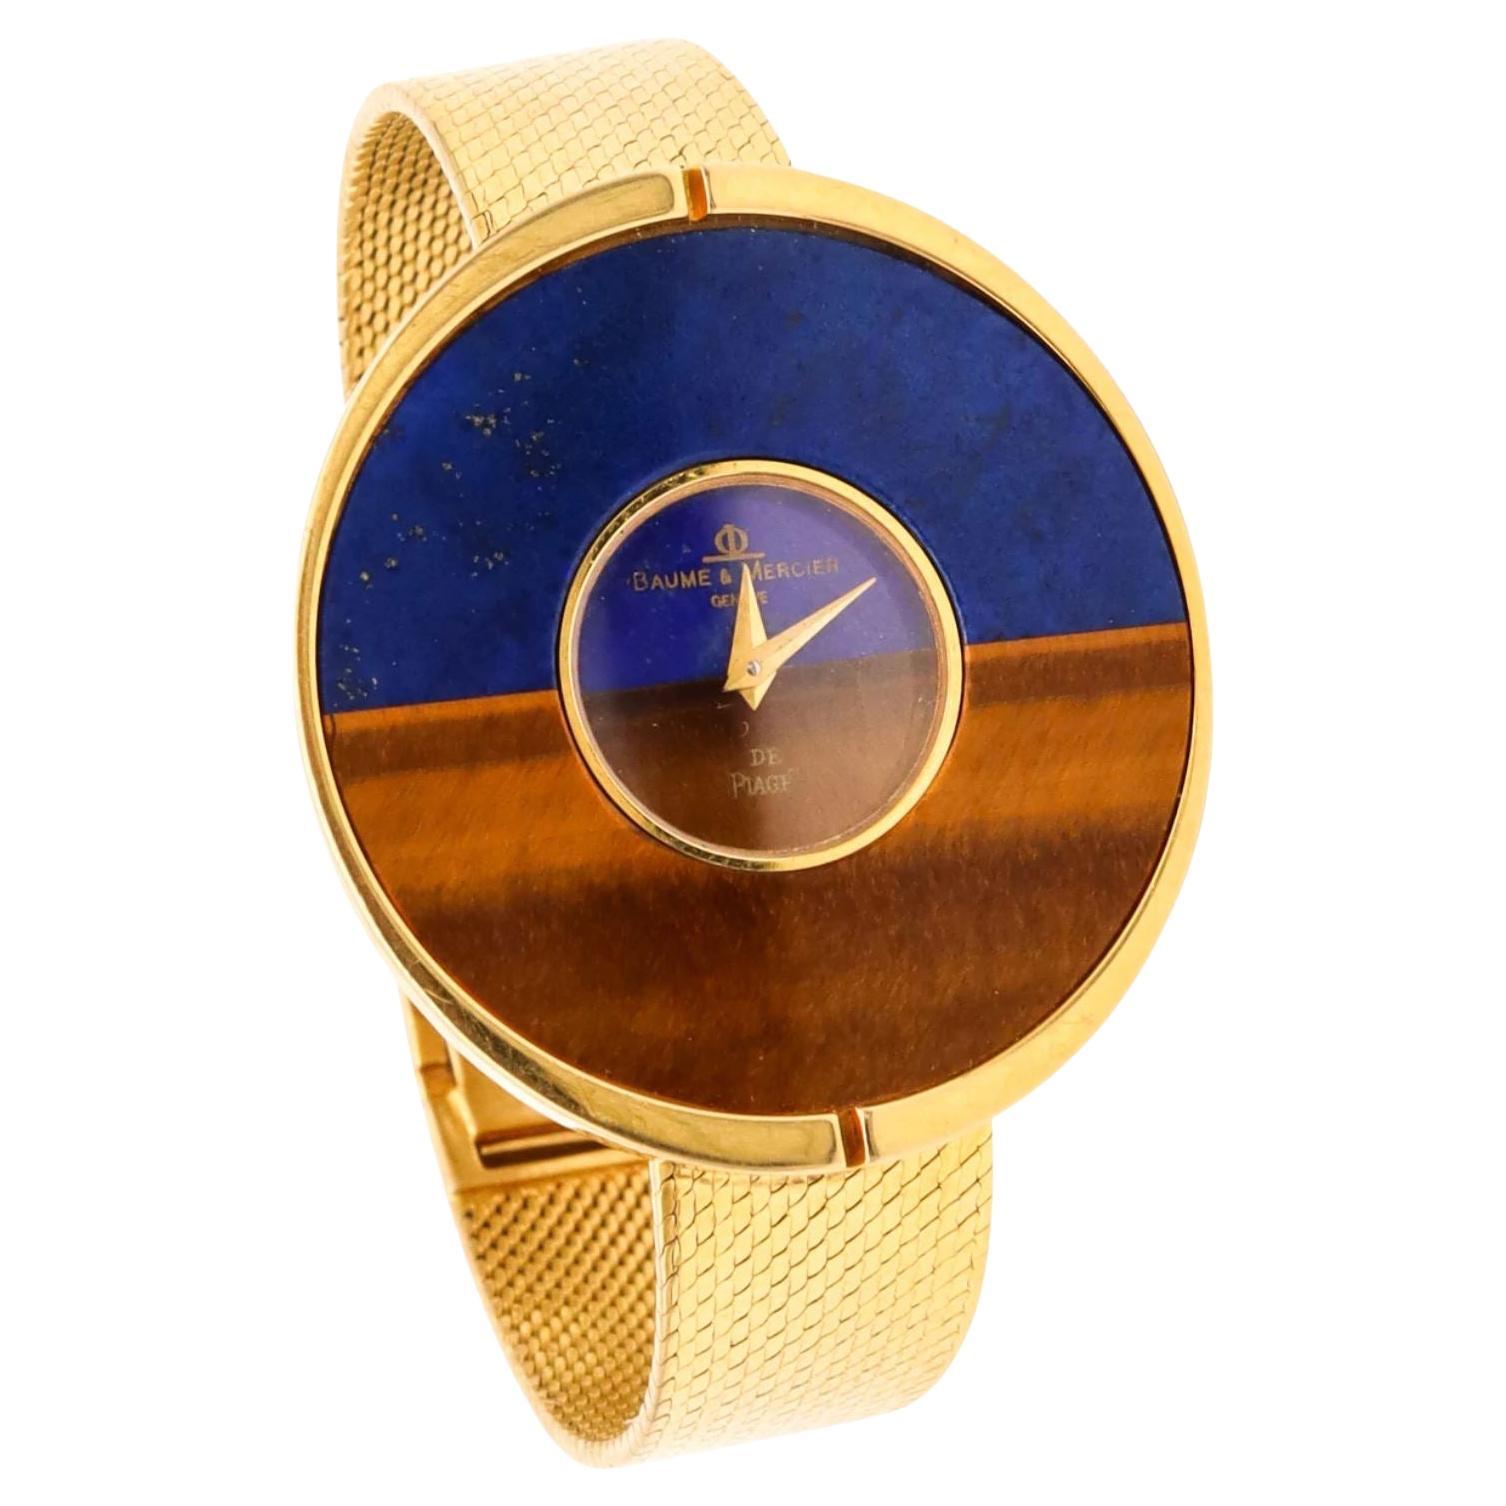 Baume & Mercier Piaget 1970 Retro Modern Bracelet Wristwatch in 18Kt with Lapis